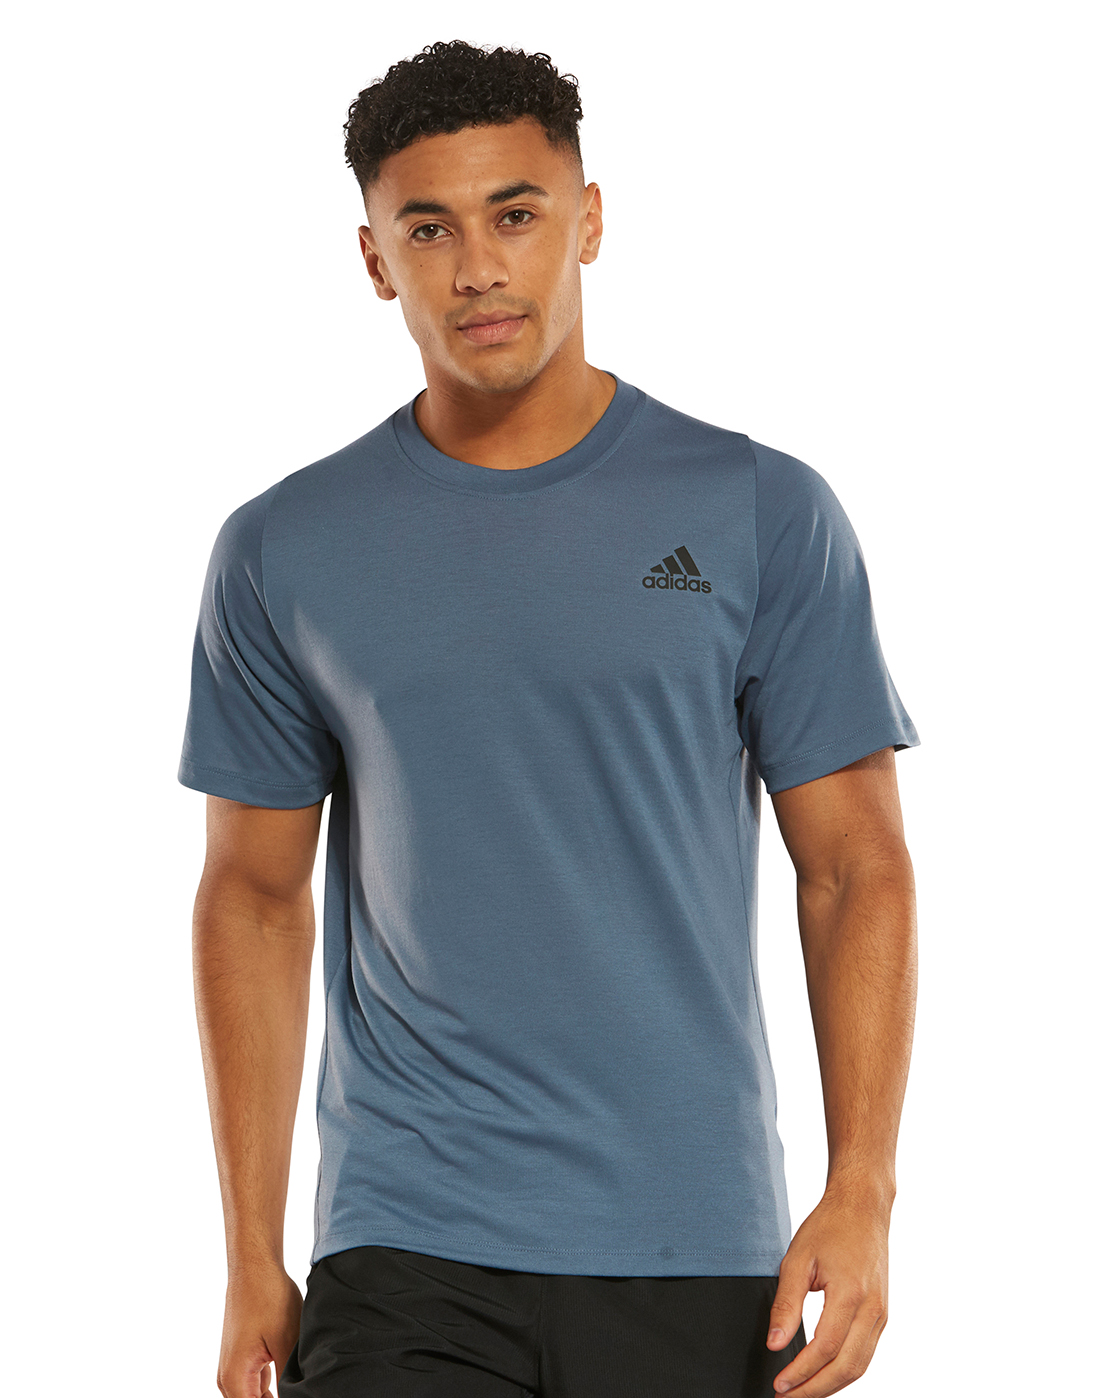 Men's Dark Blue adidas Climalite T-Shirt | Life Style Sports